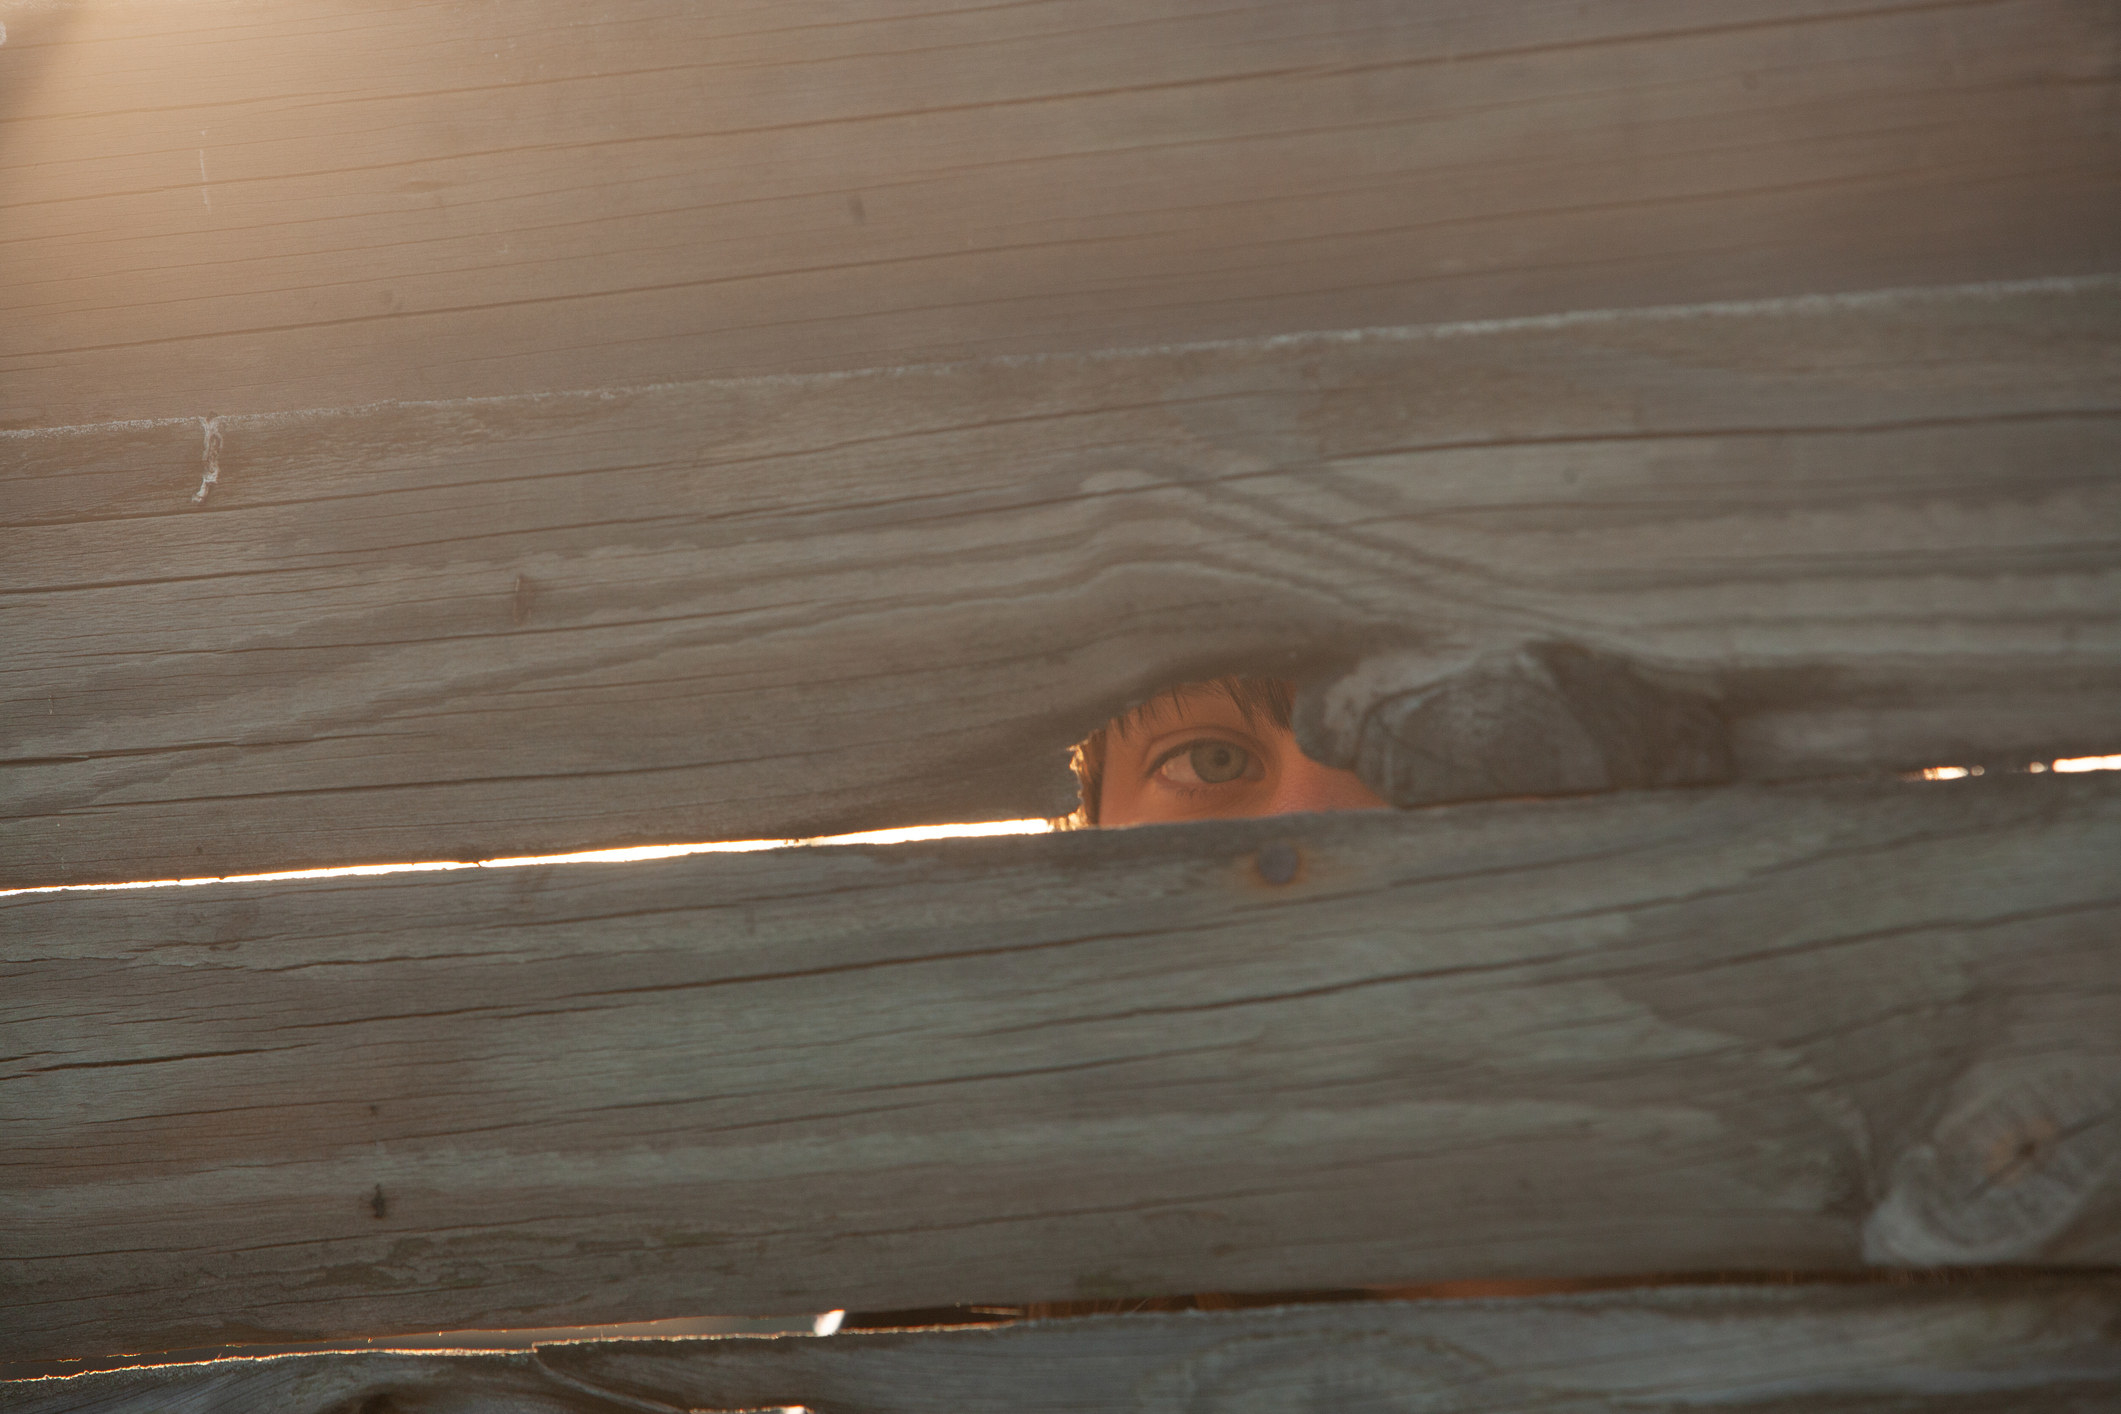 A blue eye seen peeking through a crack in a wooden fence